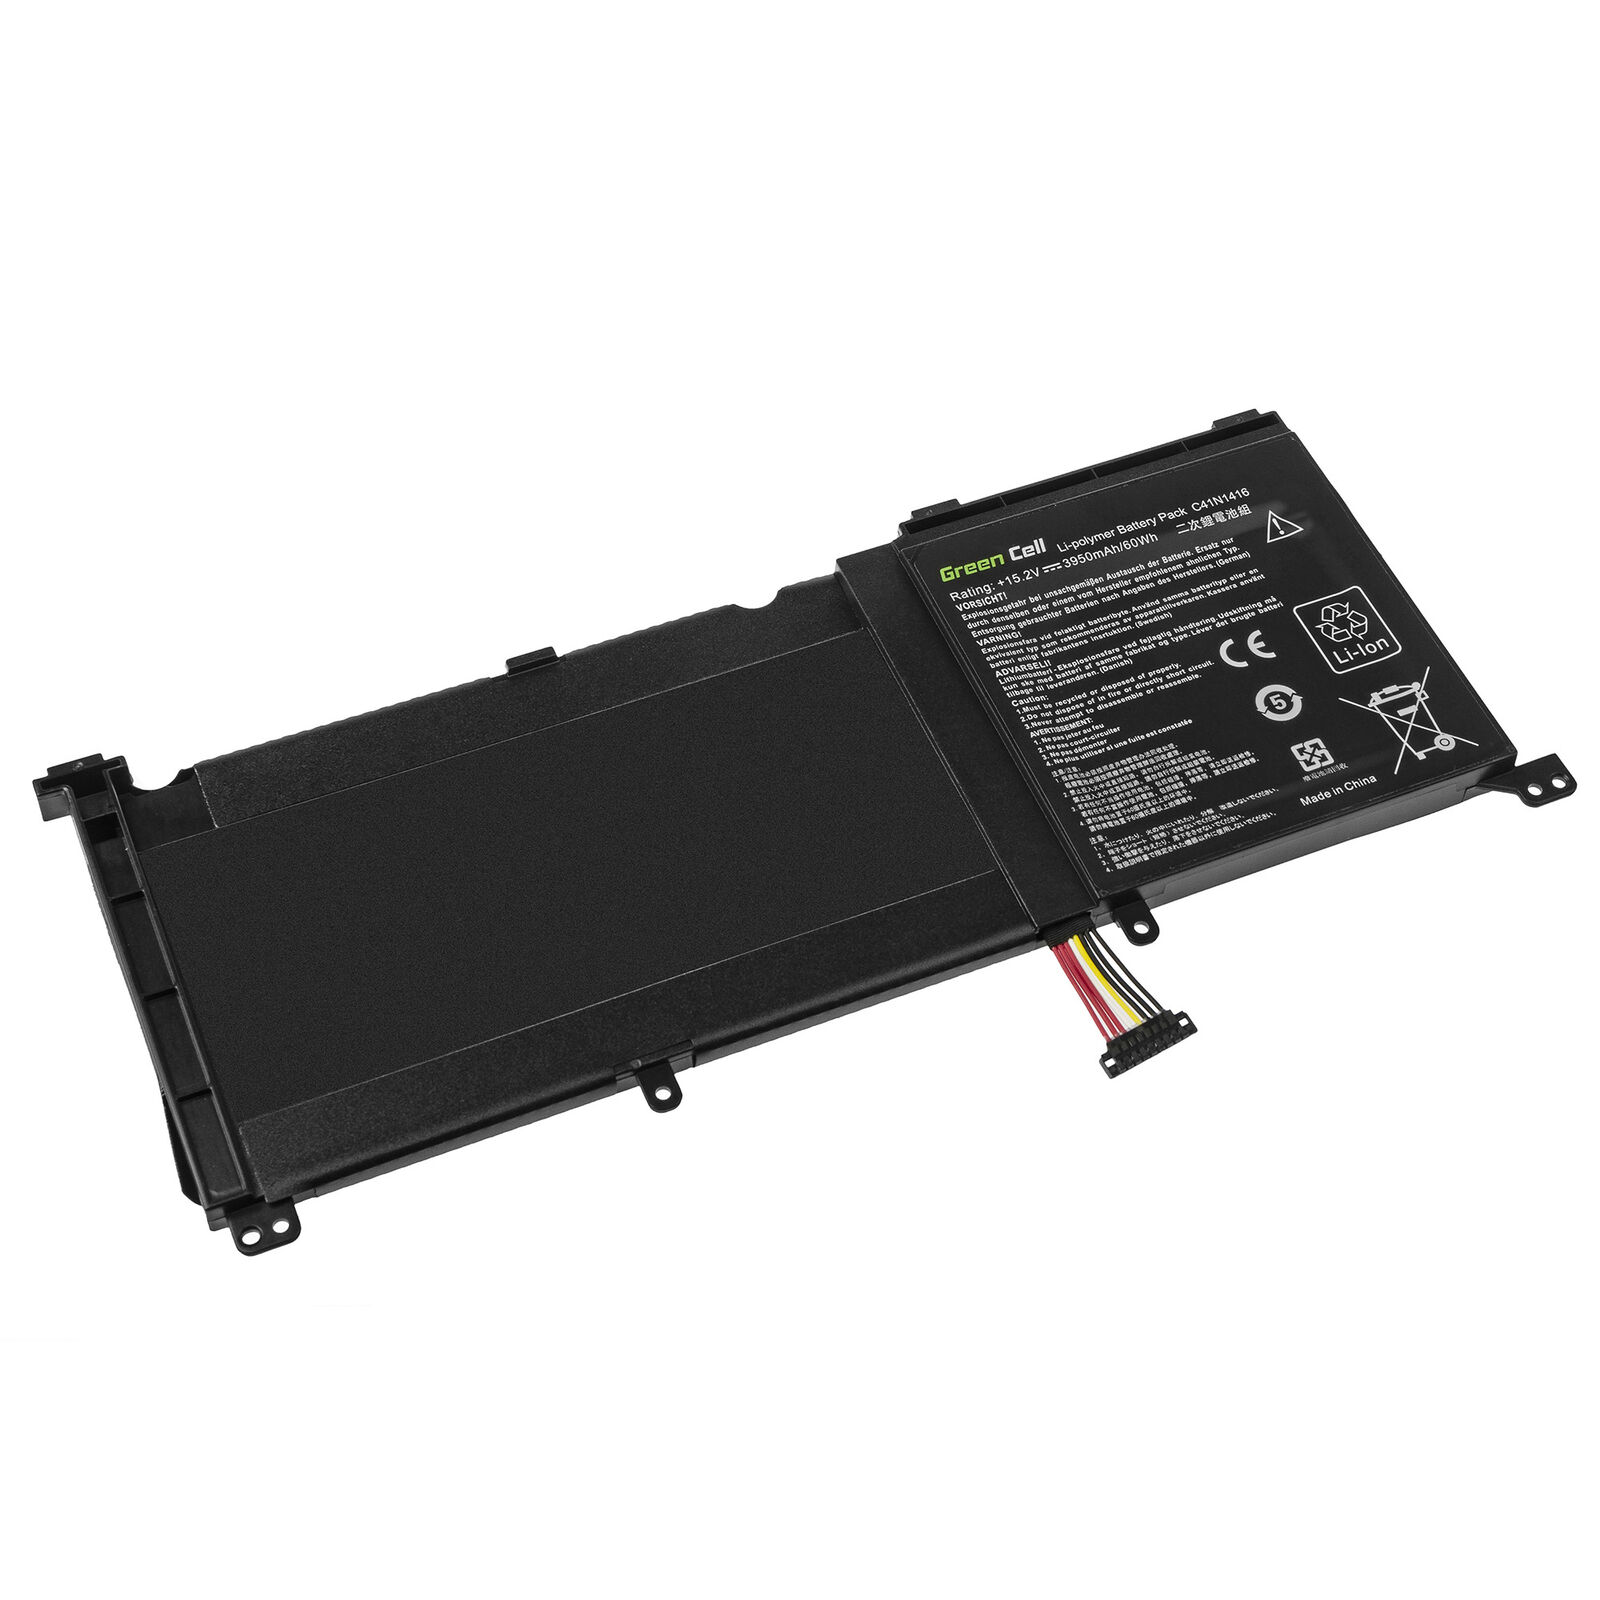 C41N1416 Asus ZenBook Pro G501 G501J G501VW N501L UX501J 3950mAh kompatybilny bateria - Kliknij obrazek, aby zamkn±æ